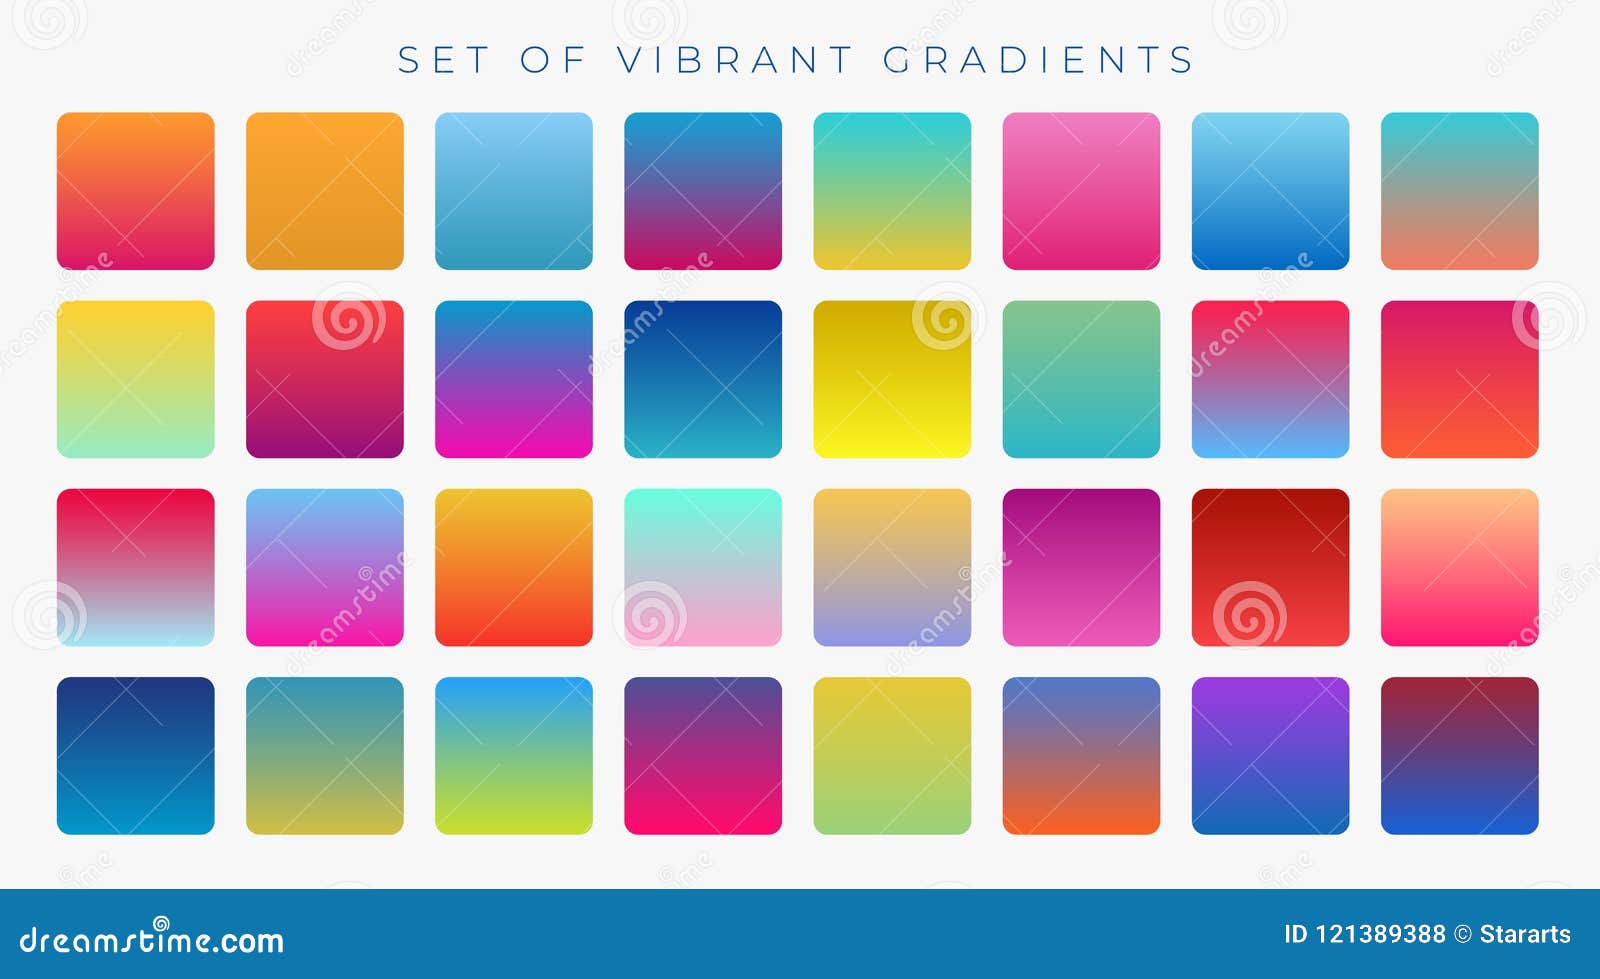 bright vibrant set of gradients background